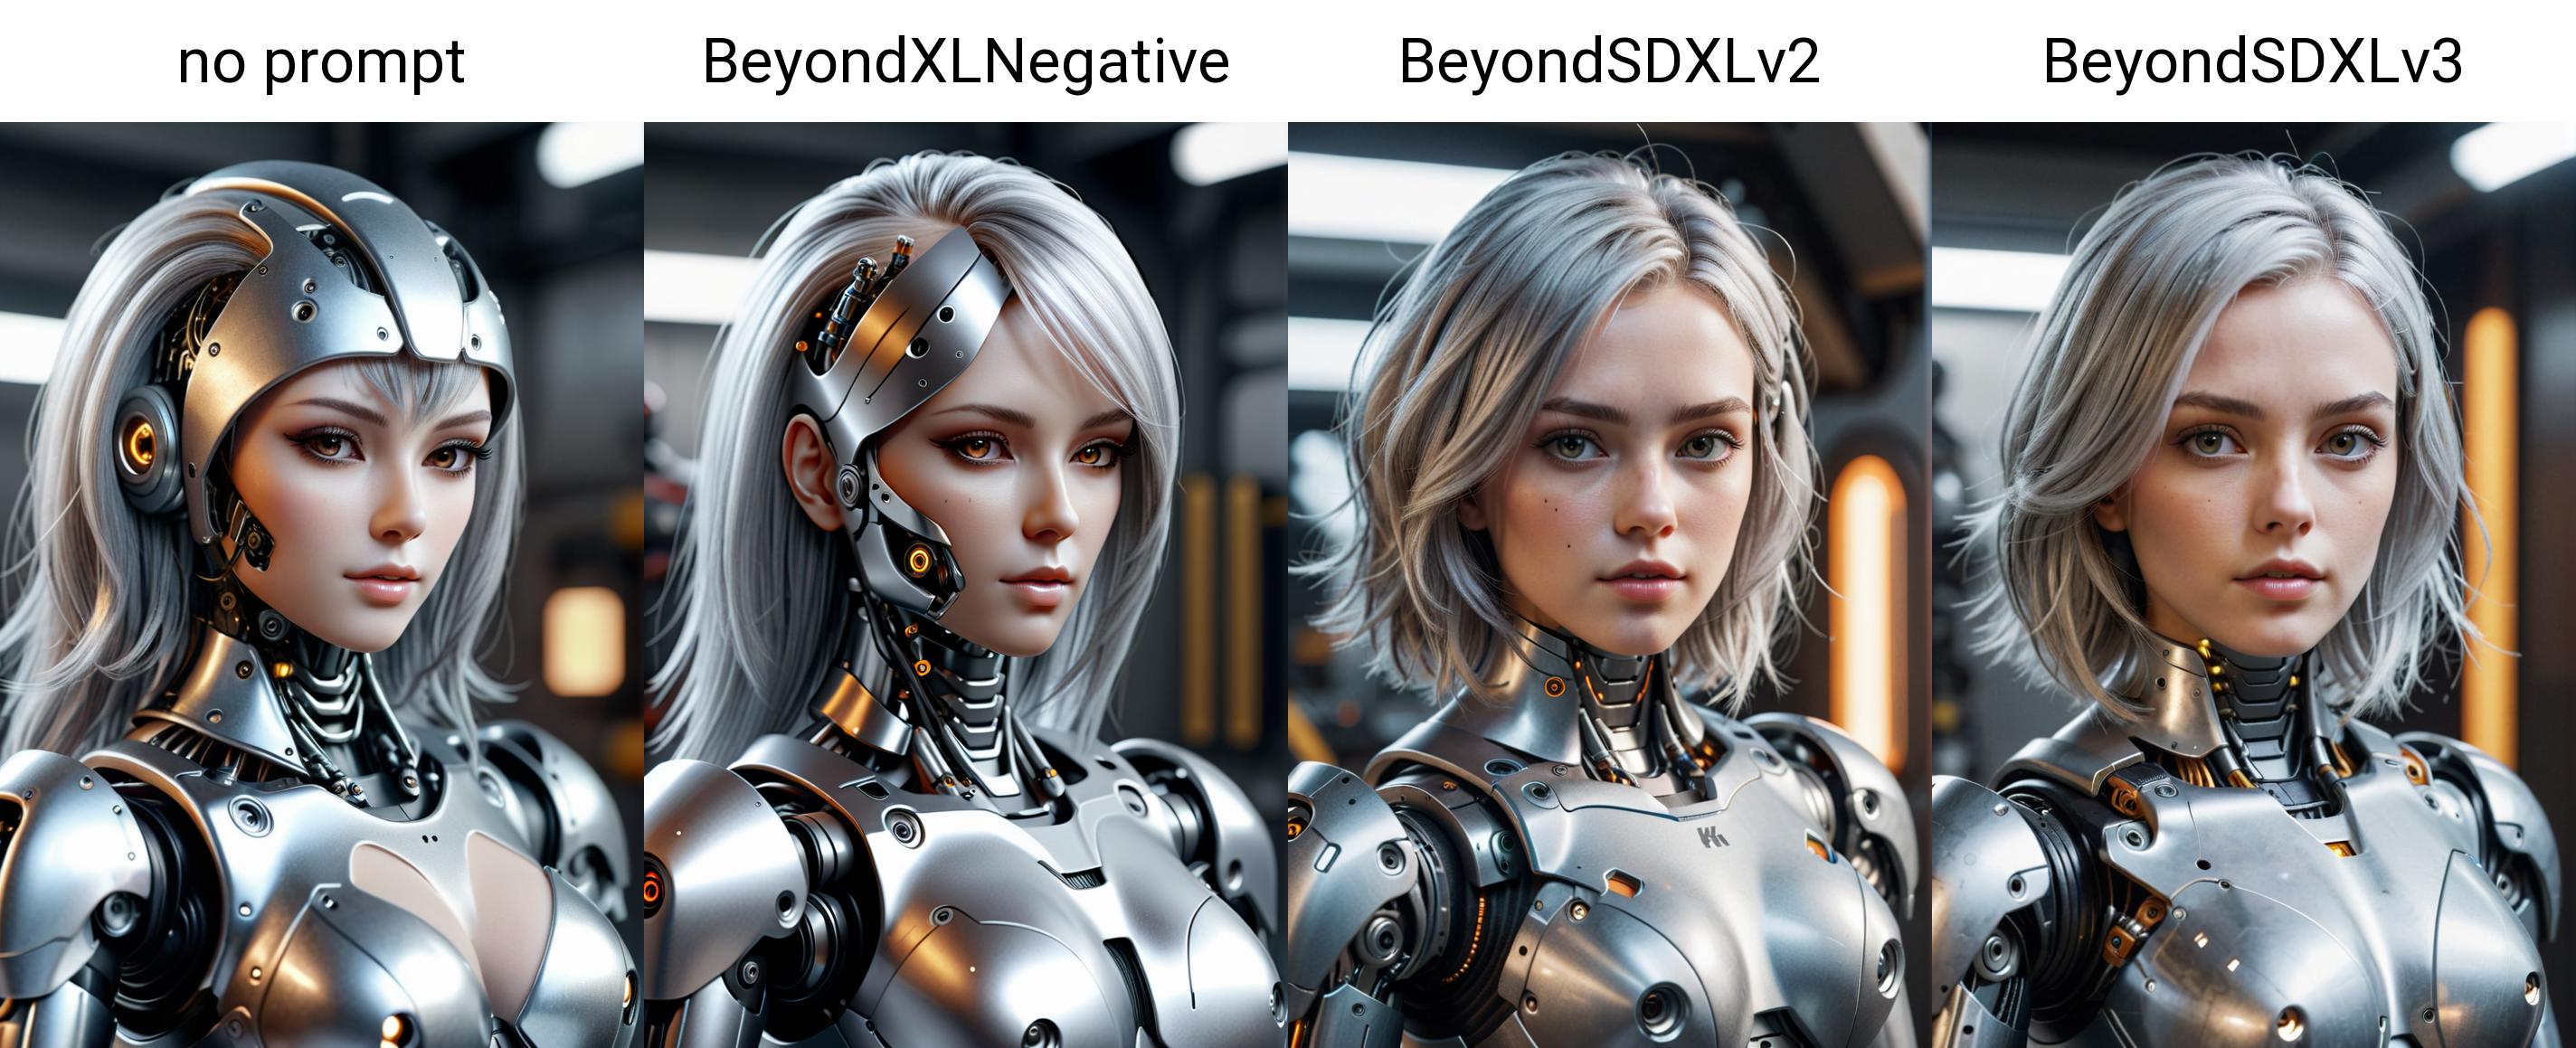 AI model image by OperationNova